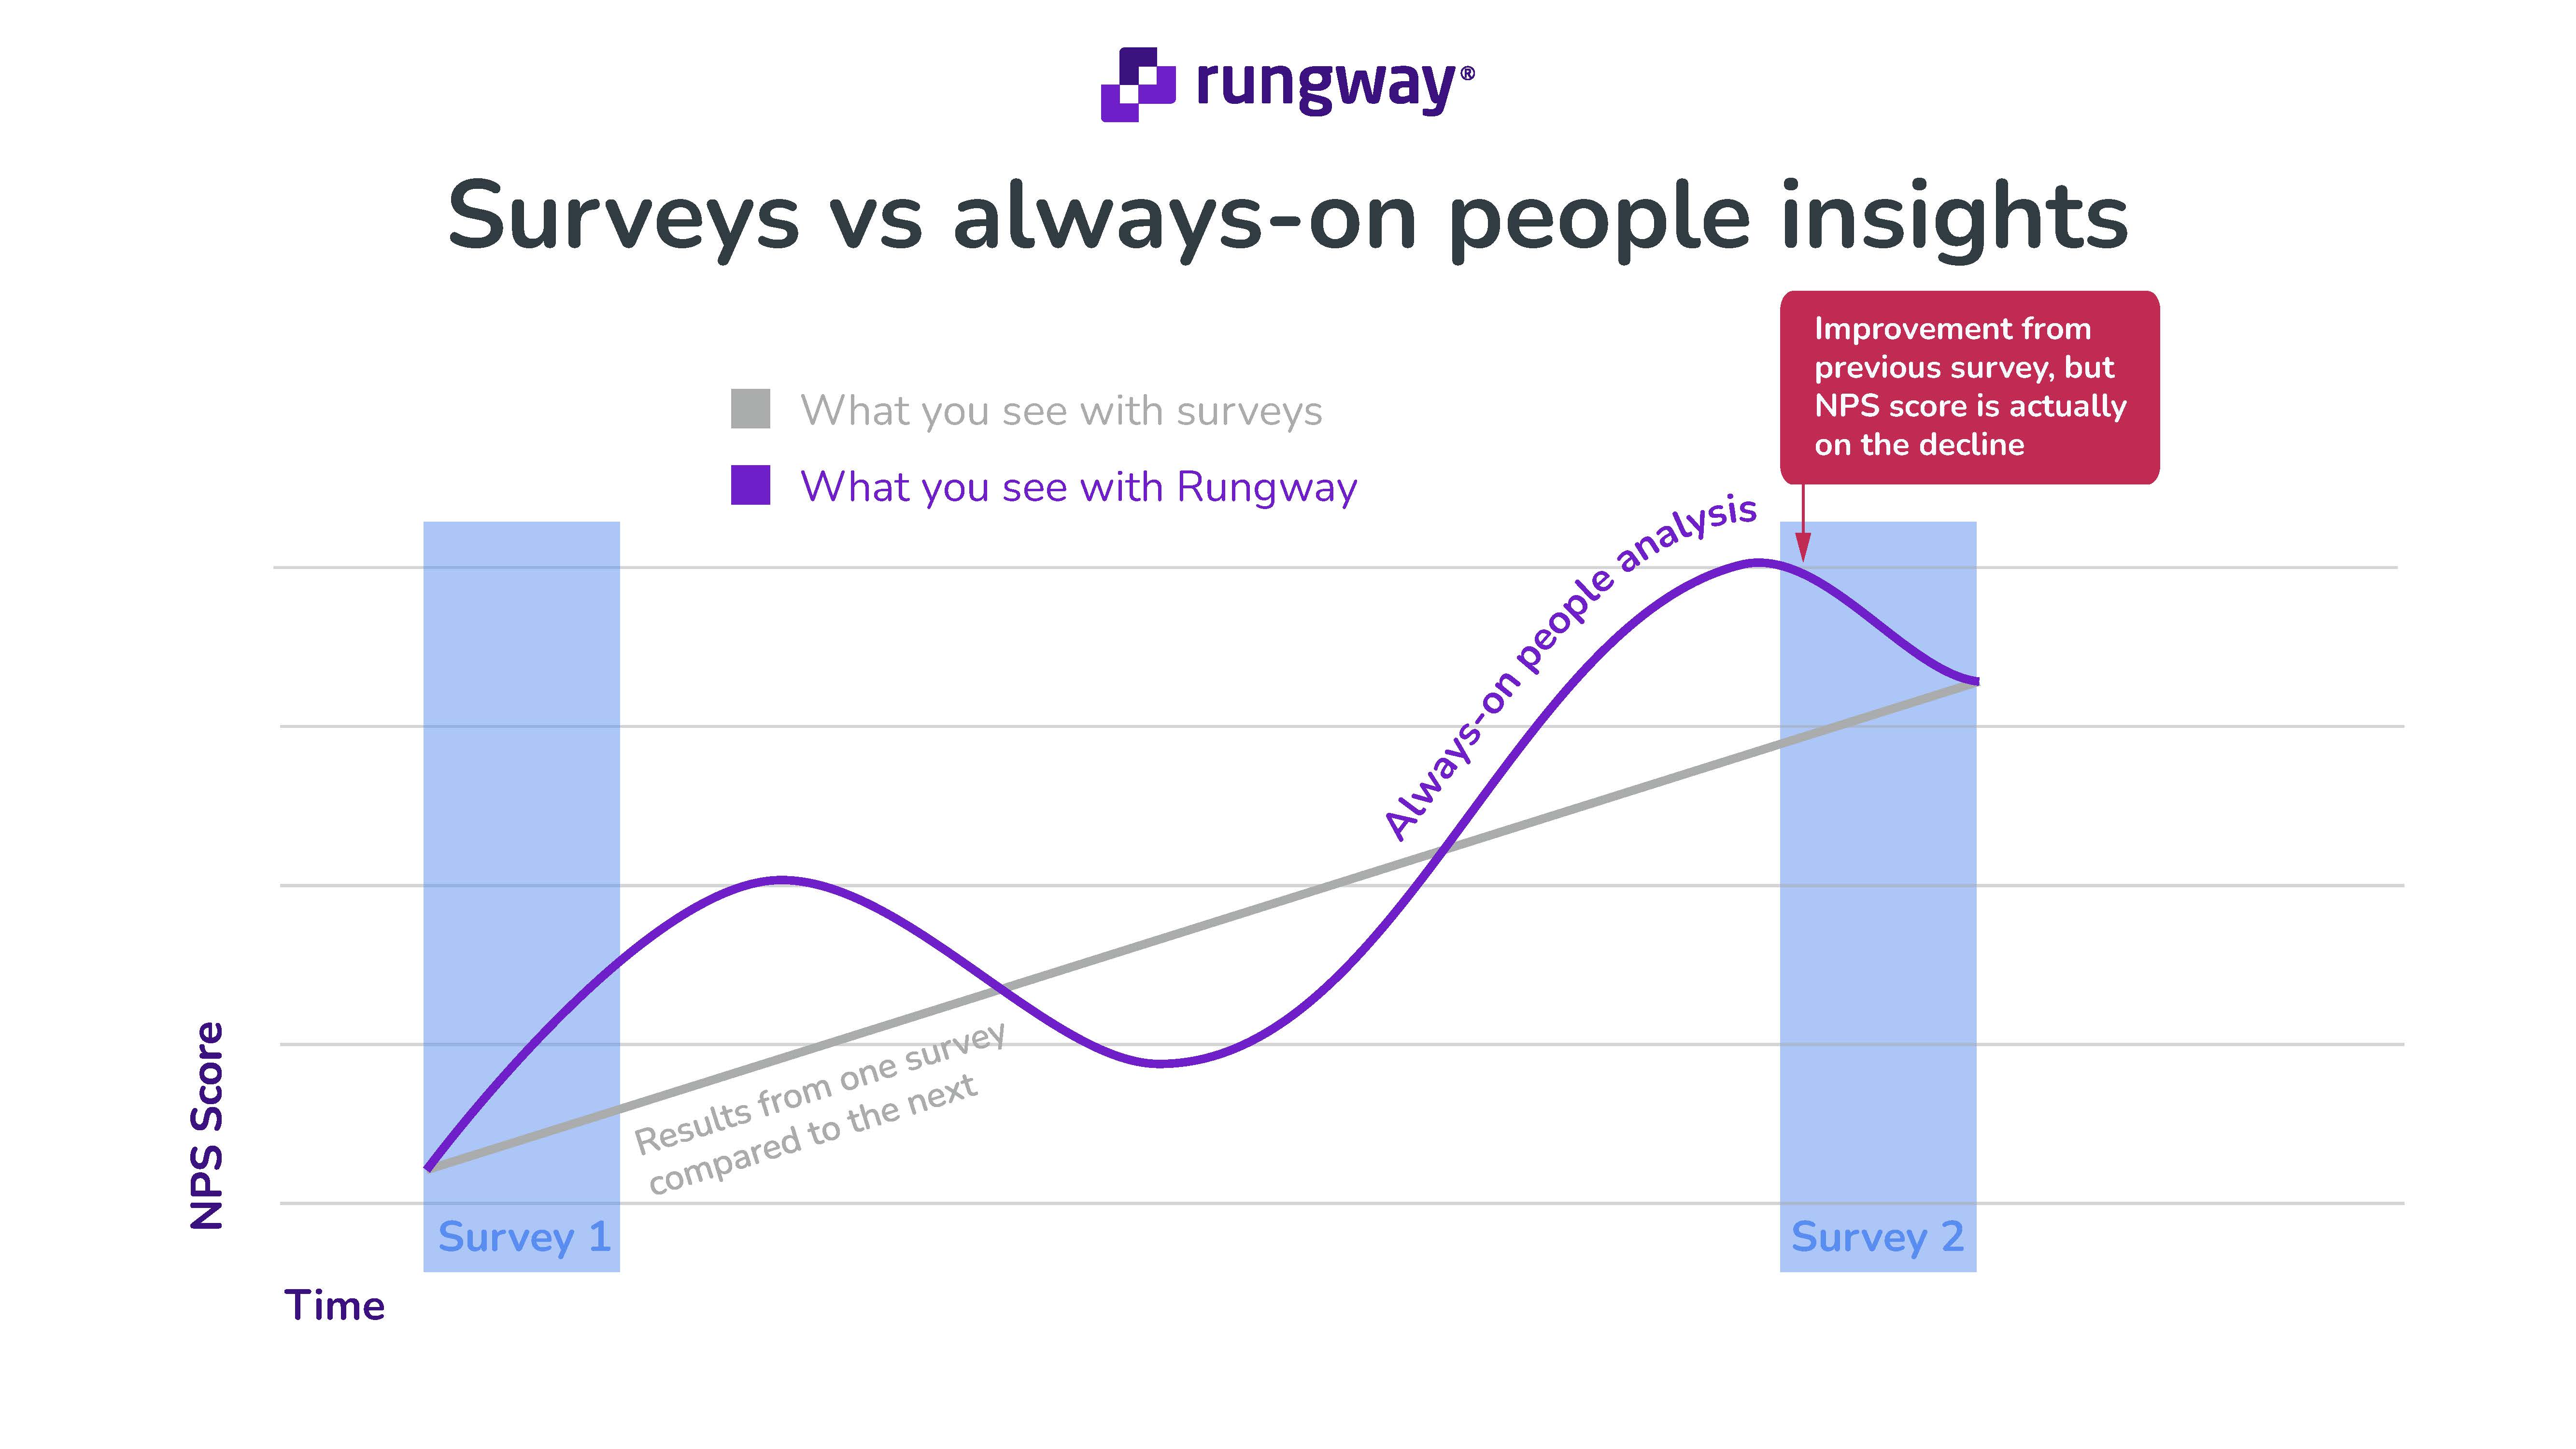 Surveys vs Always-on insights